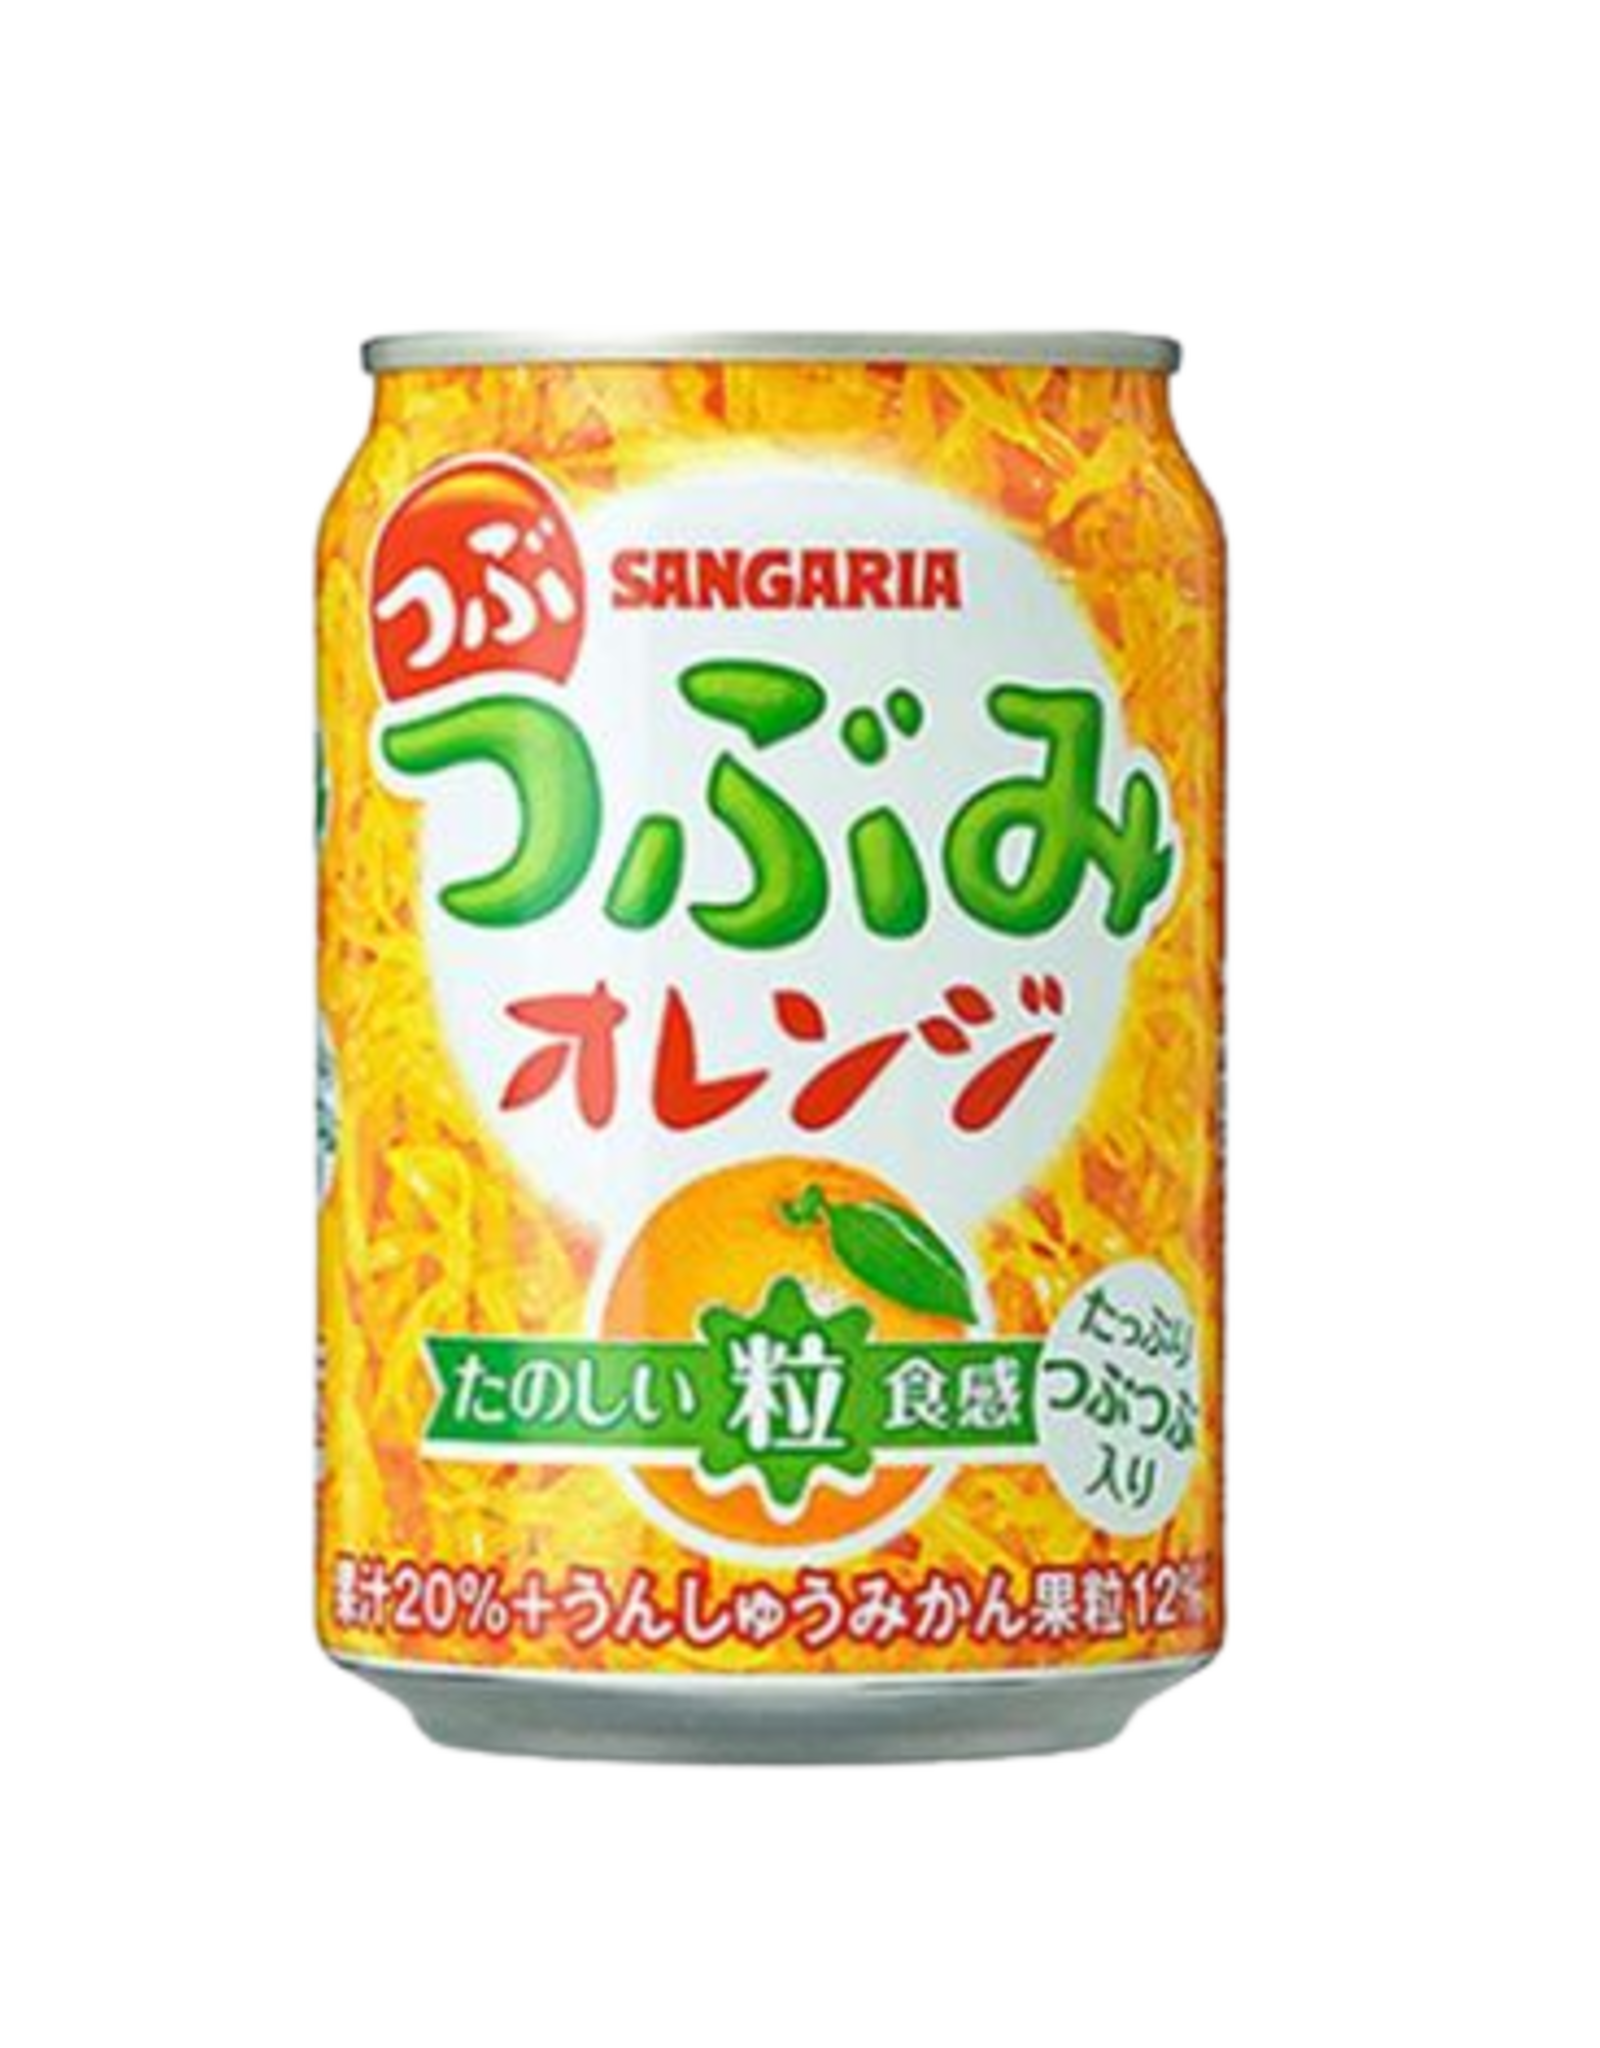 Sangaria Tsubumi Orange – Japan Can